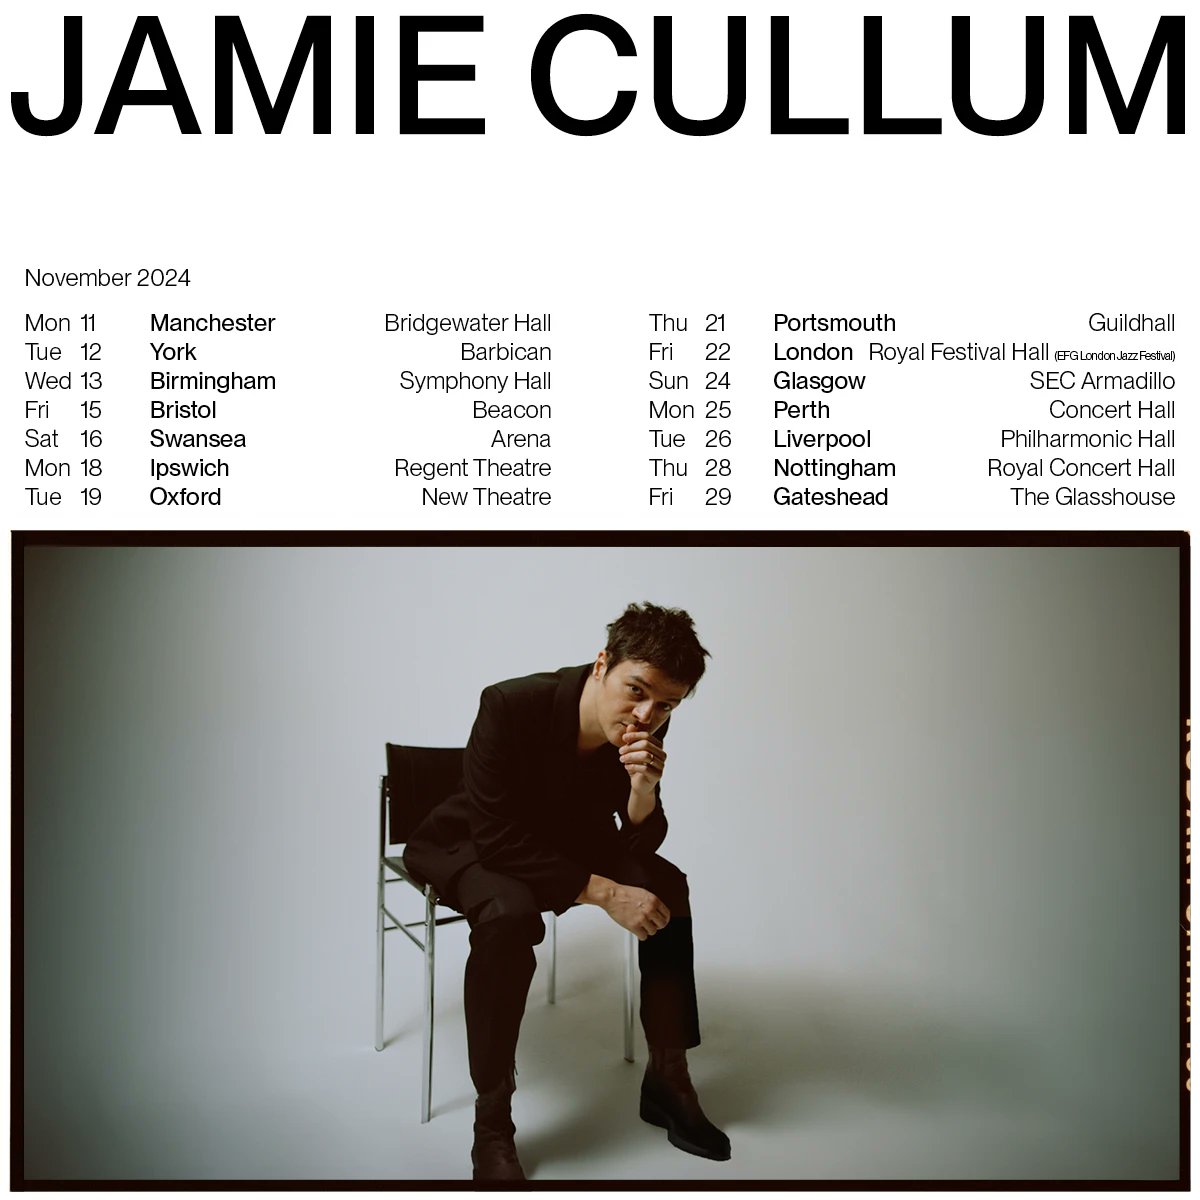 Jamie Cullum al Liverpool Philharmonic Hall Tickets